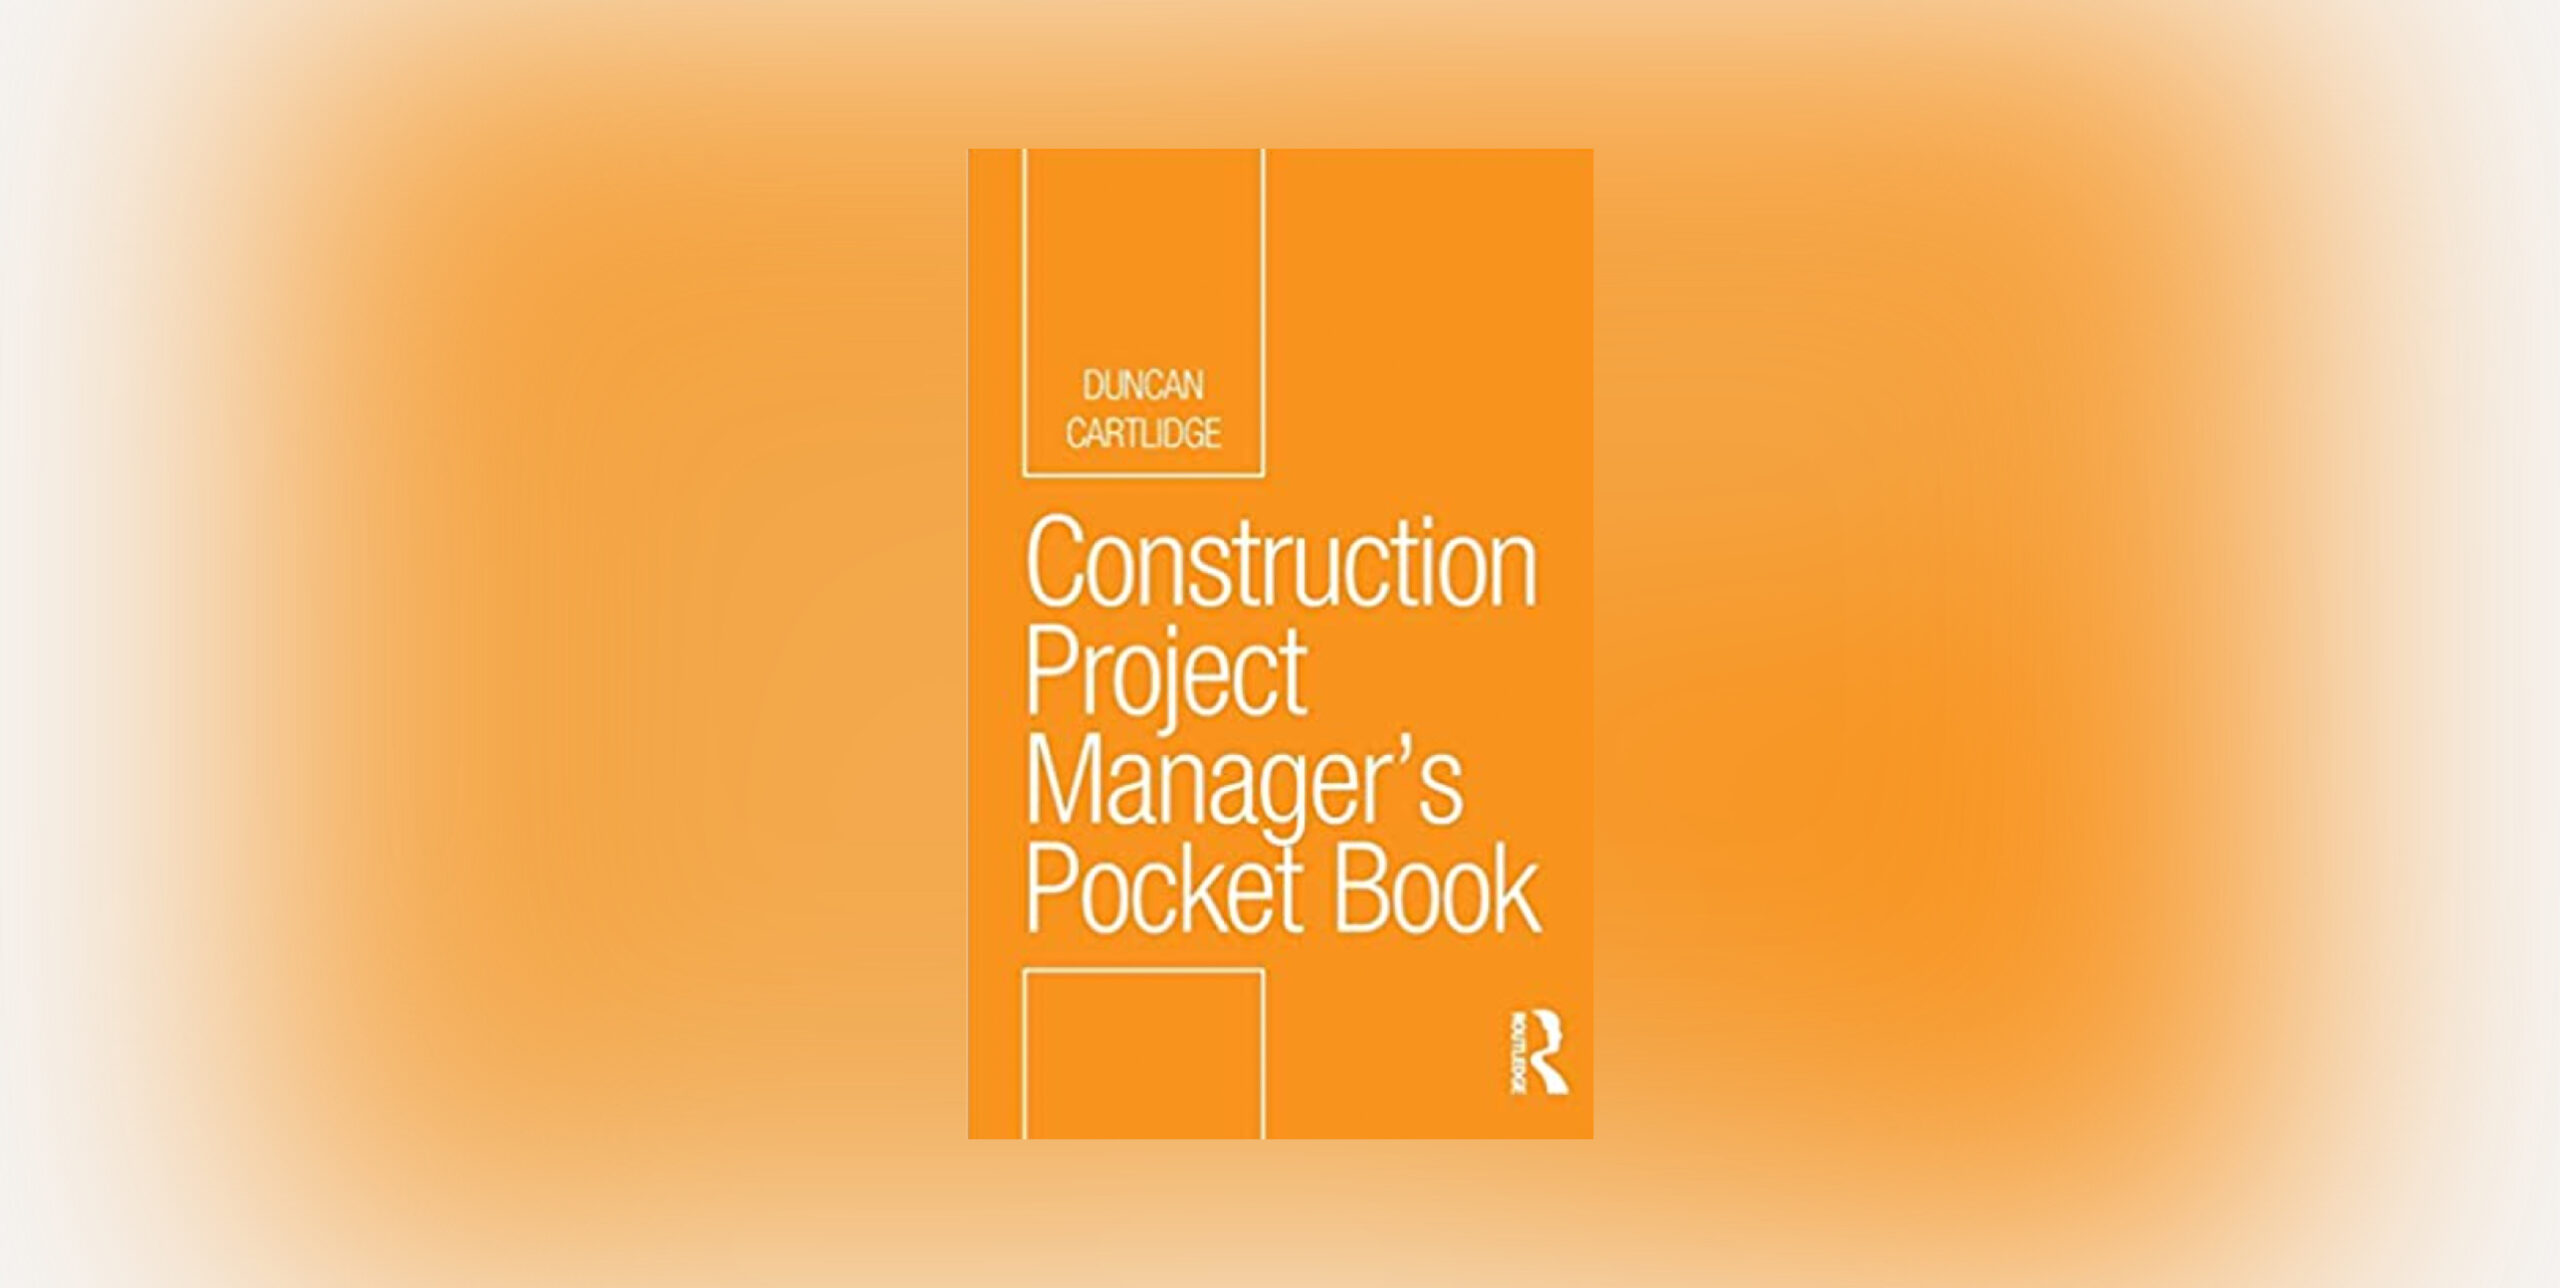 Construction pocket book on orange background